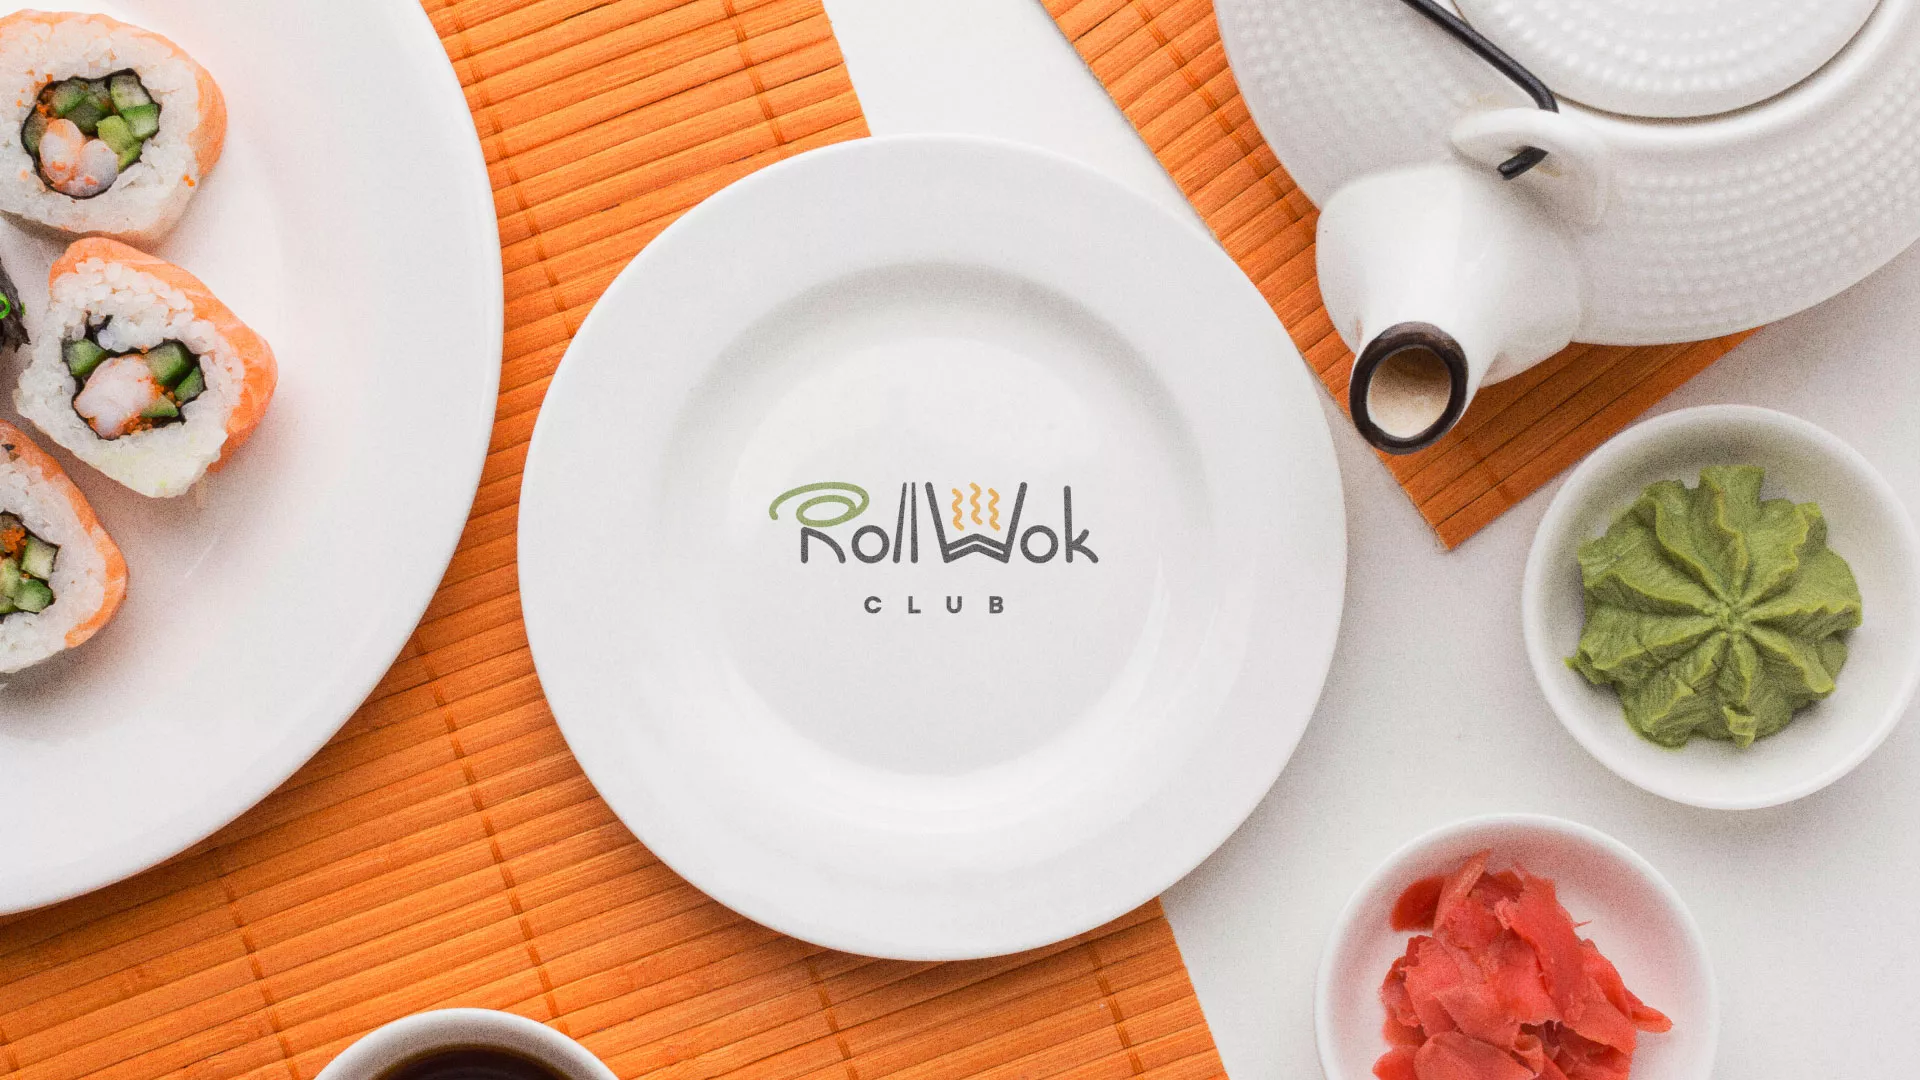 Разработка логотипа и фирменного стиля суши-бара «Roll Wok Club» в Петухово